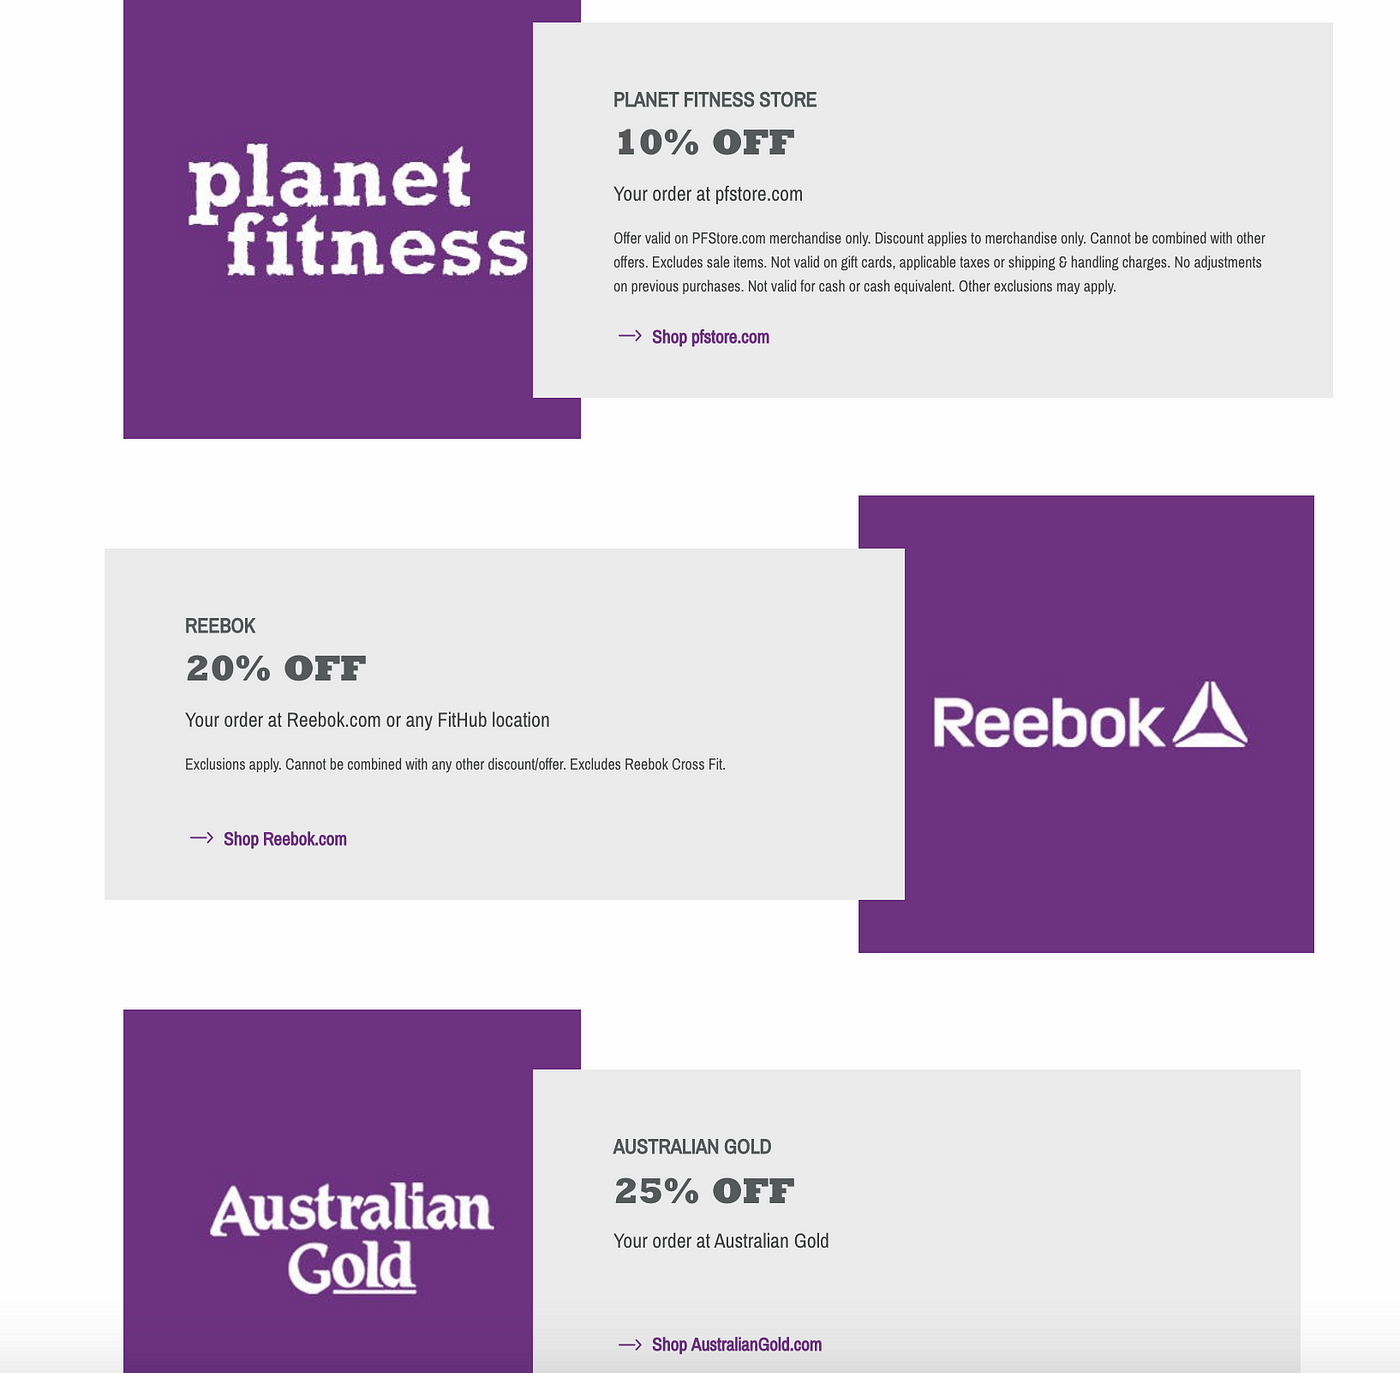 planet fitness reebok discount - 51 